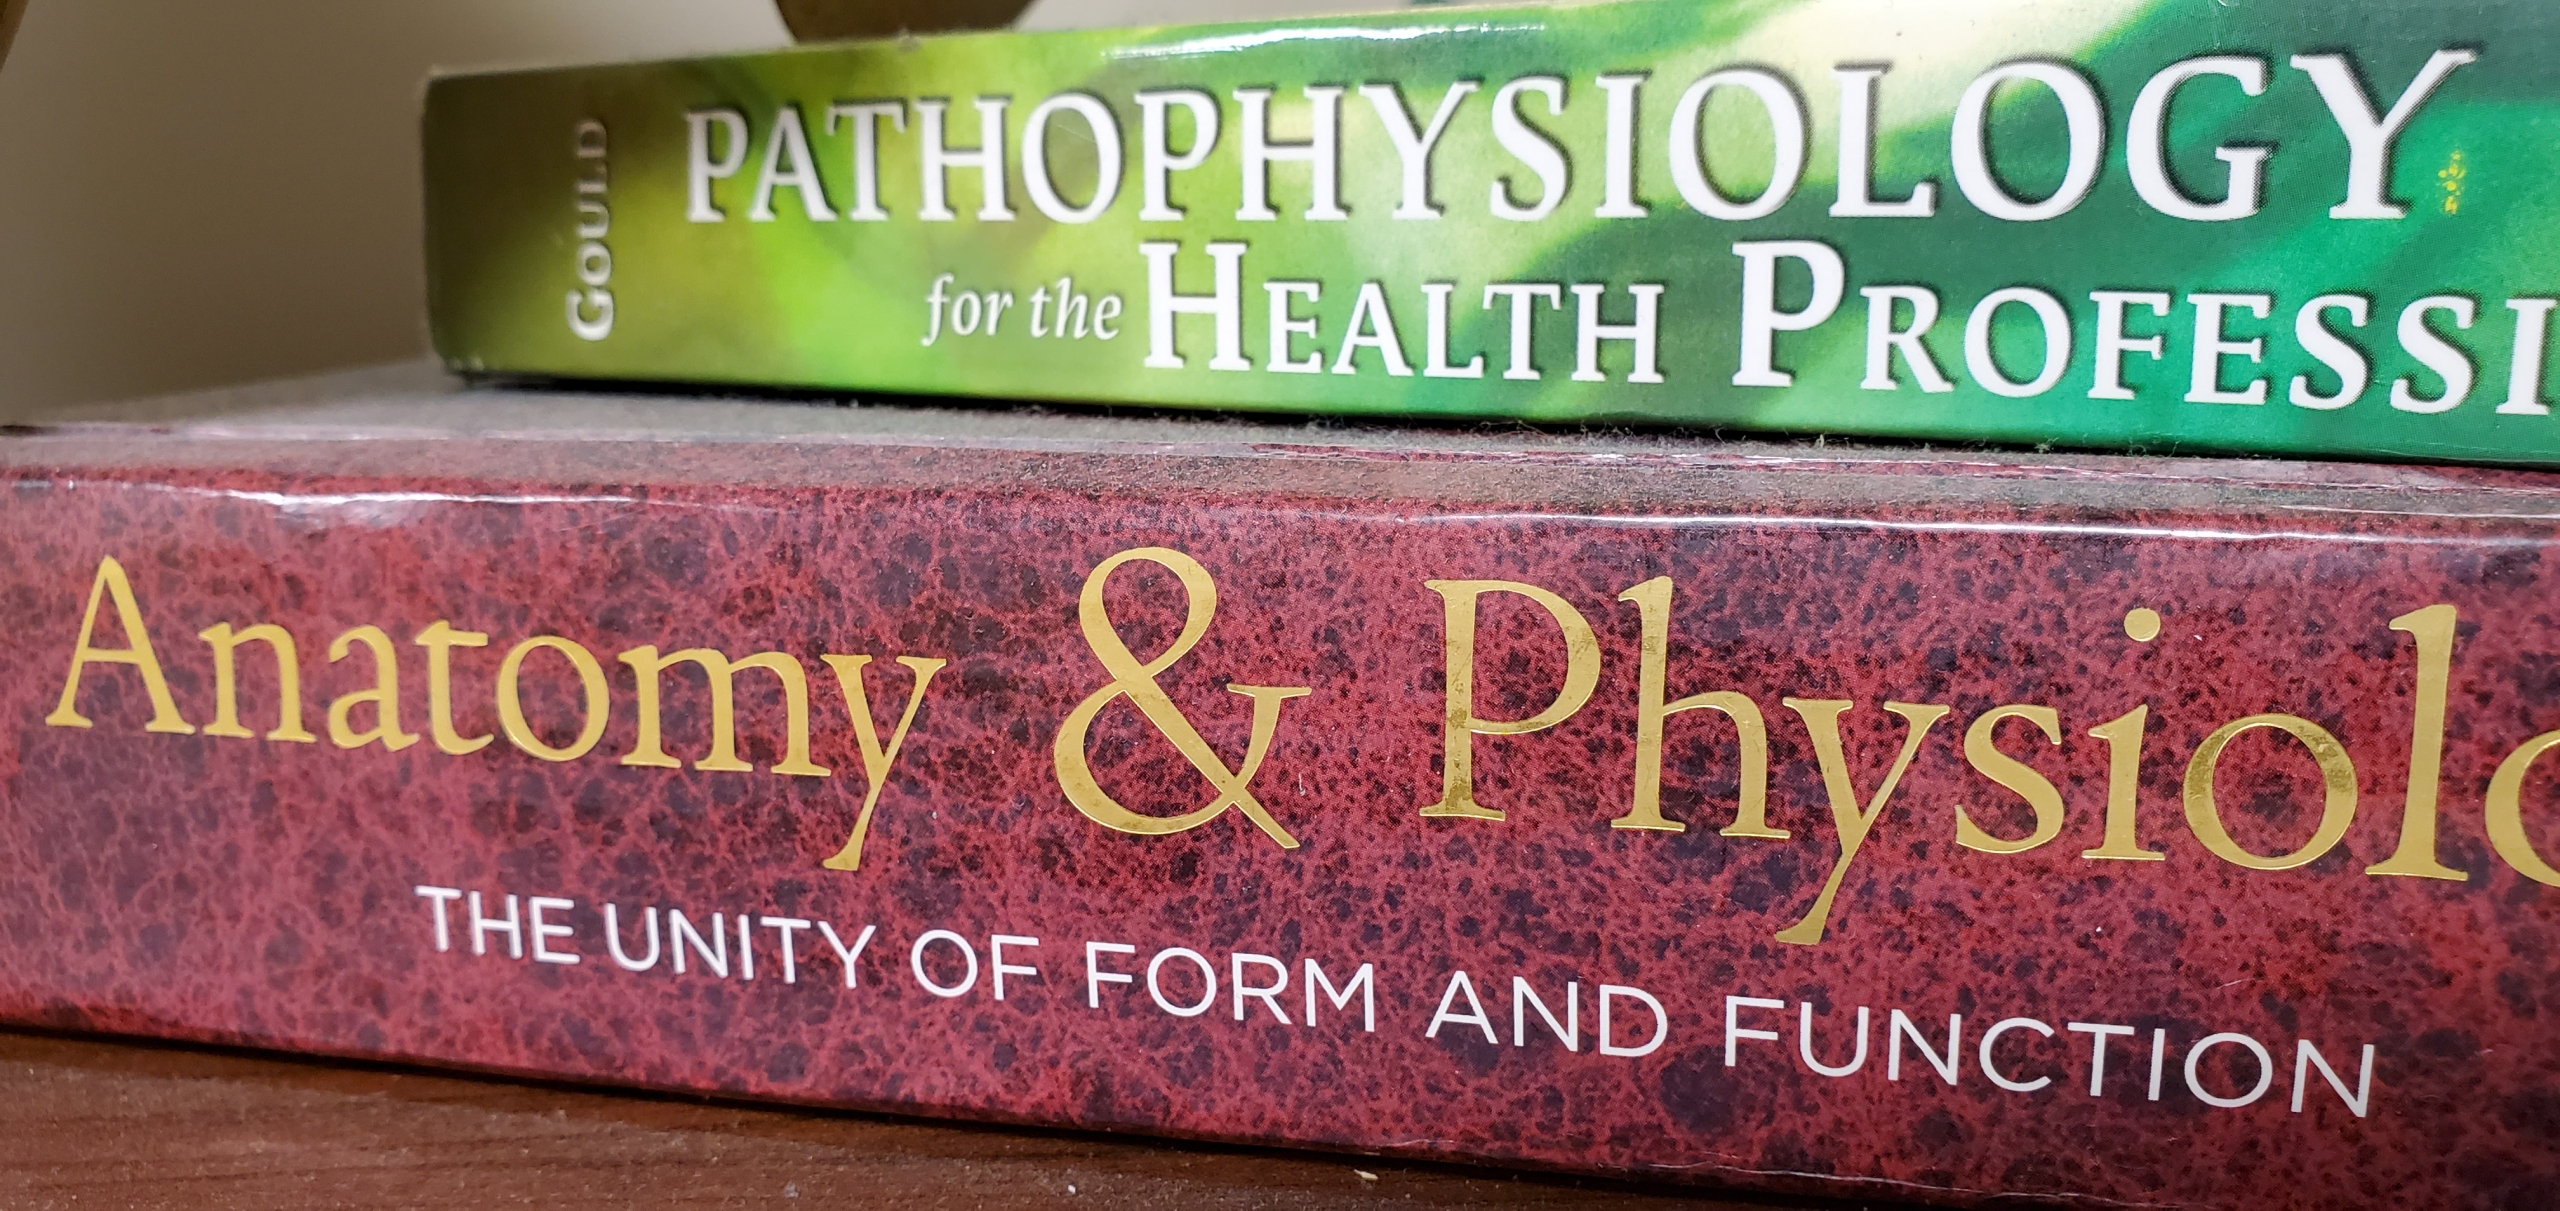 Anatomy Physiology Books